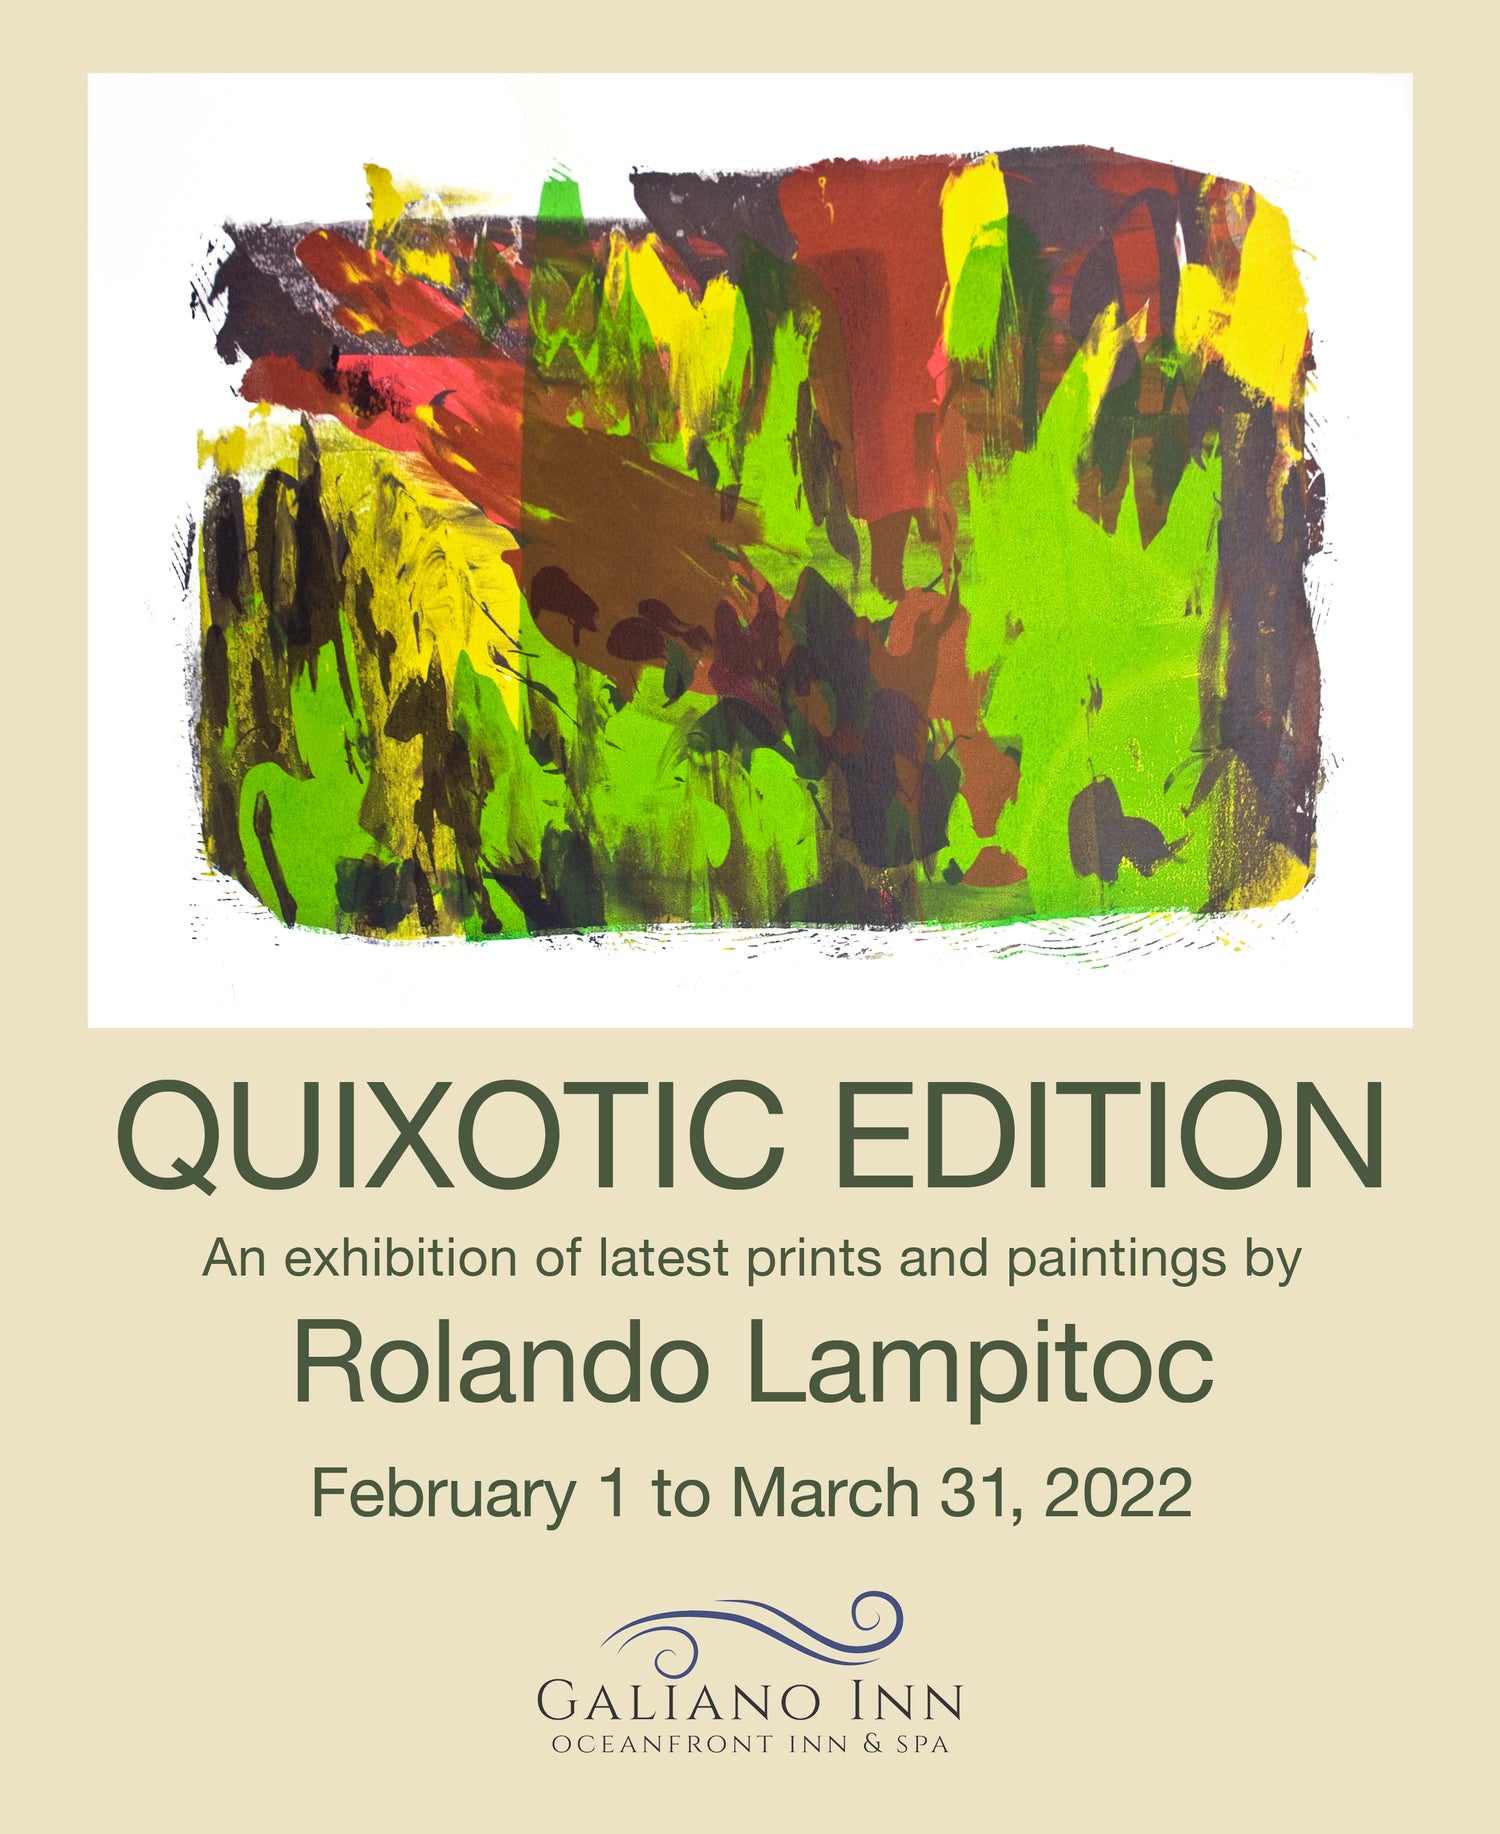 Rolando Lampitoc art at the Galiano Inn